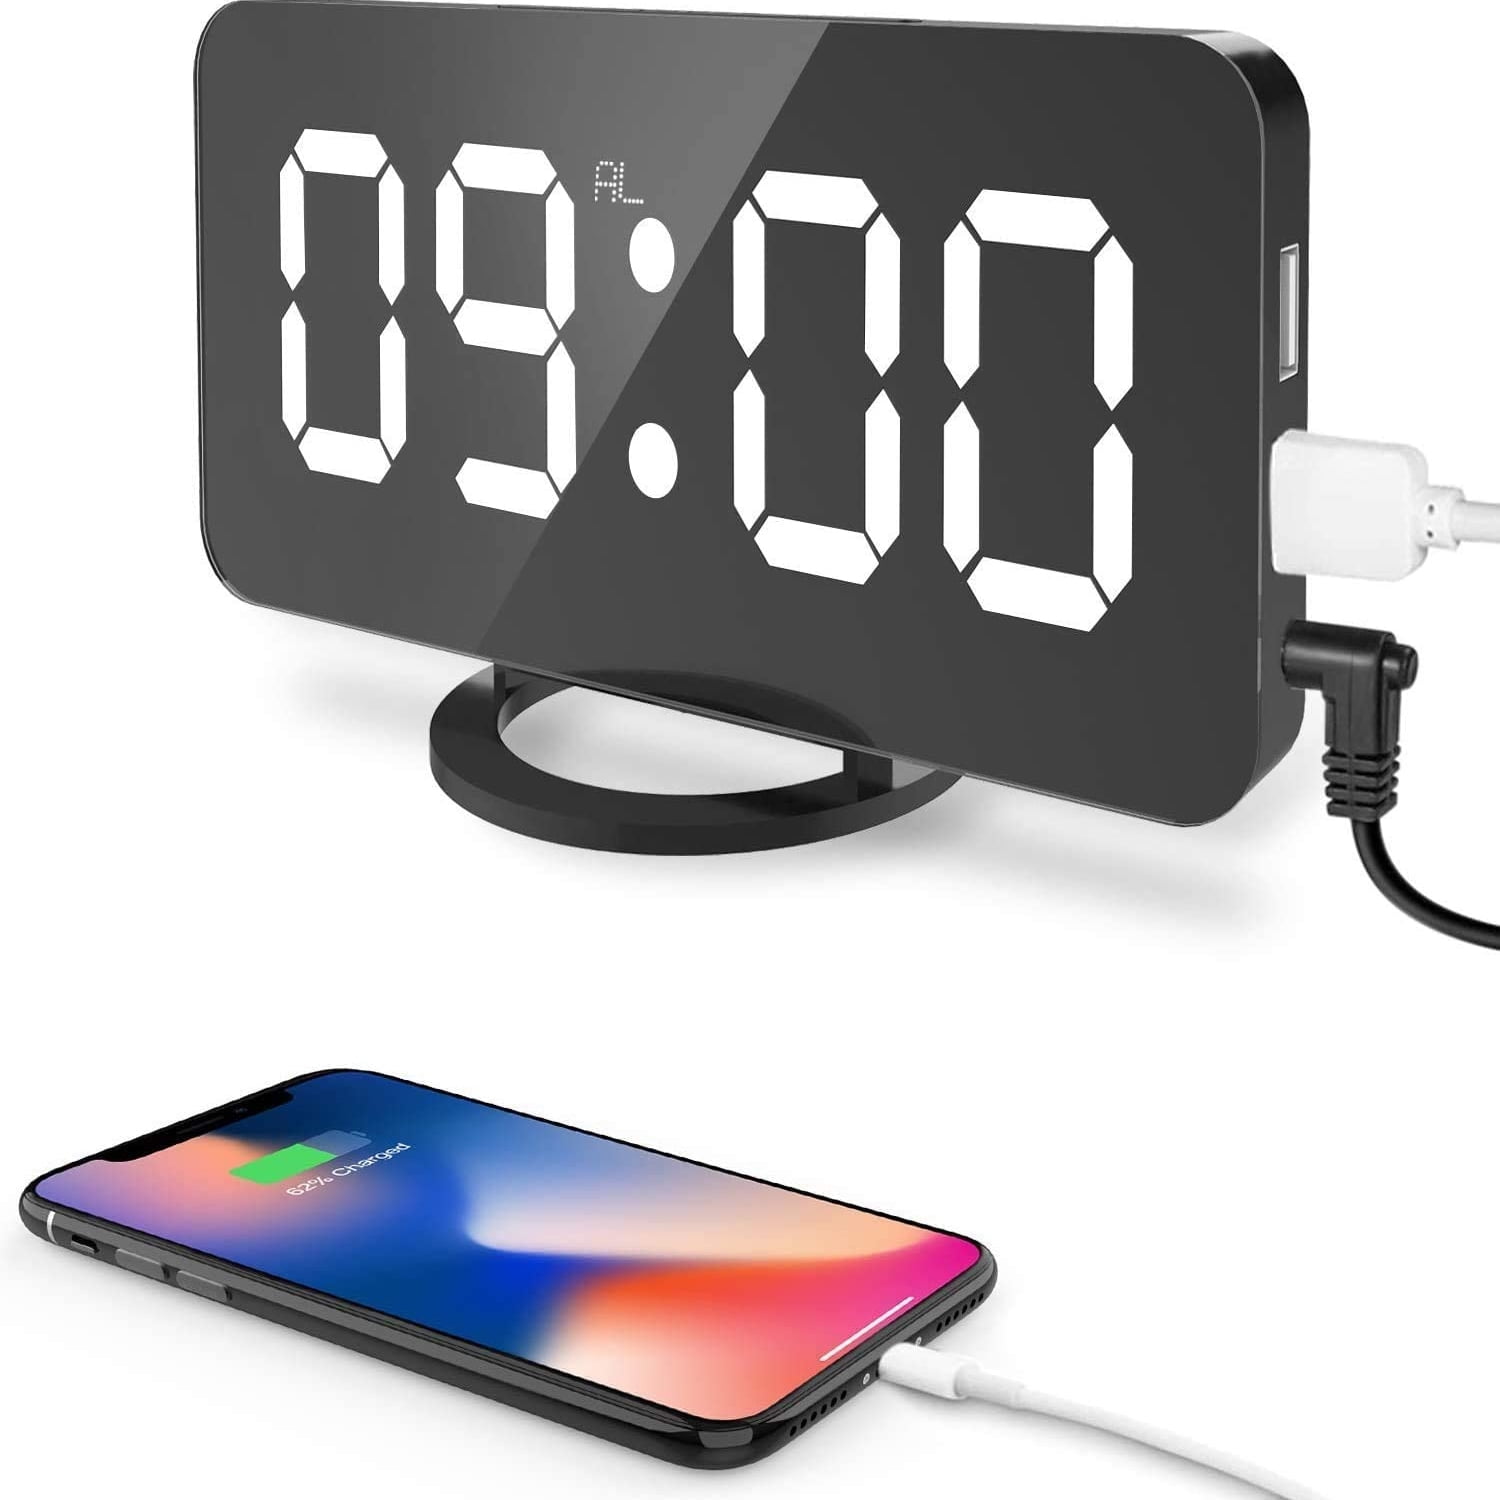 FIBISonic® LED Digital Alarm Clocks With Snooze Modern Wall Desk Table Alarm 